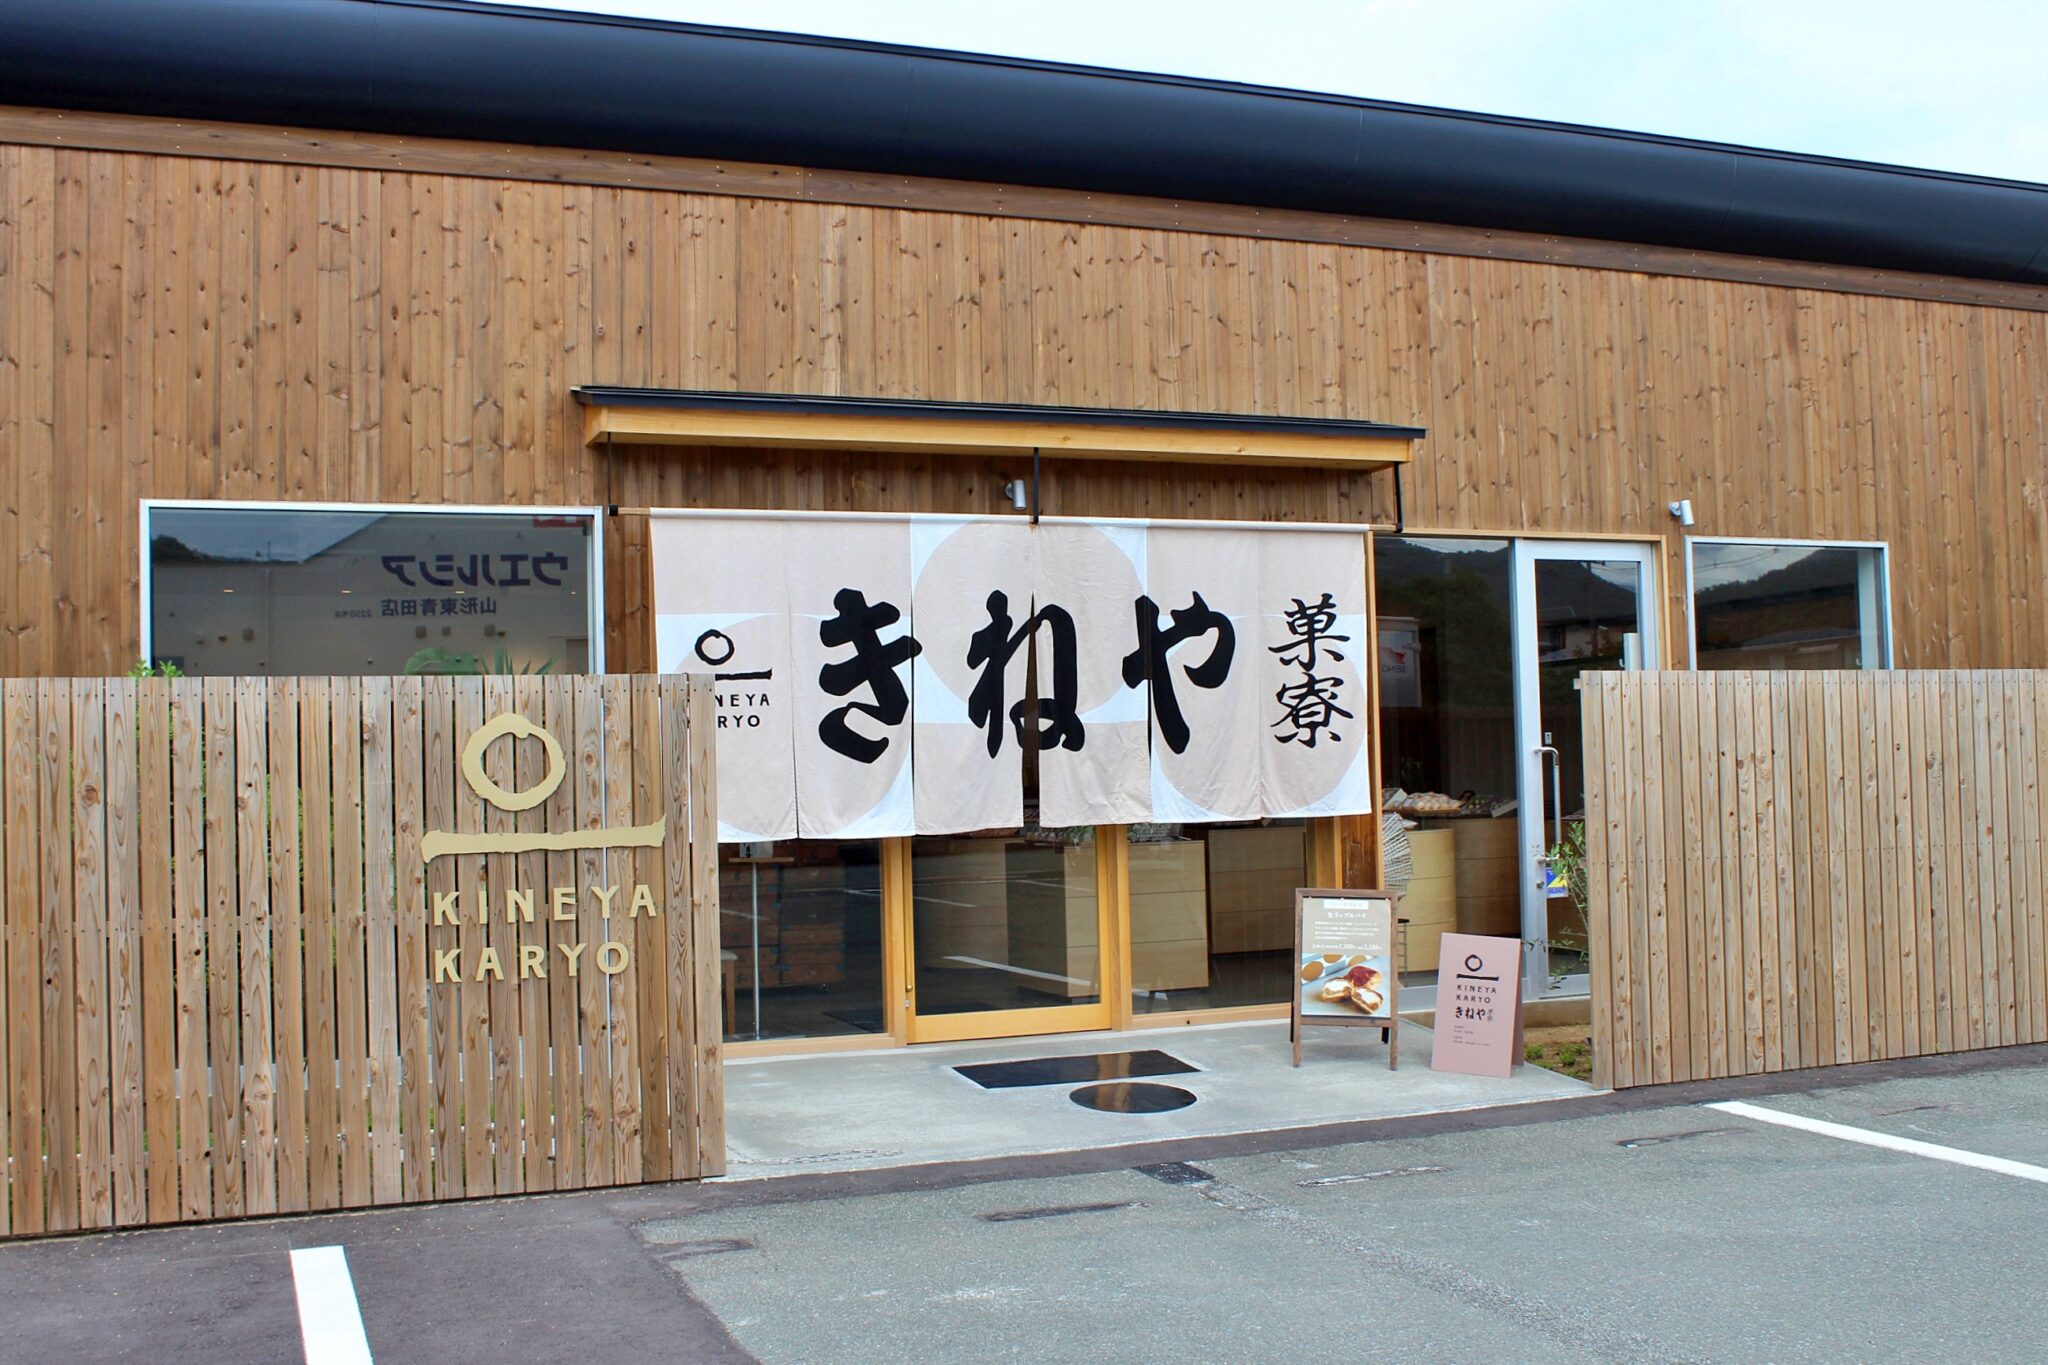 [Feature] Kineya Karyo! Café with Japanese sweets